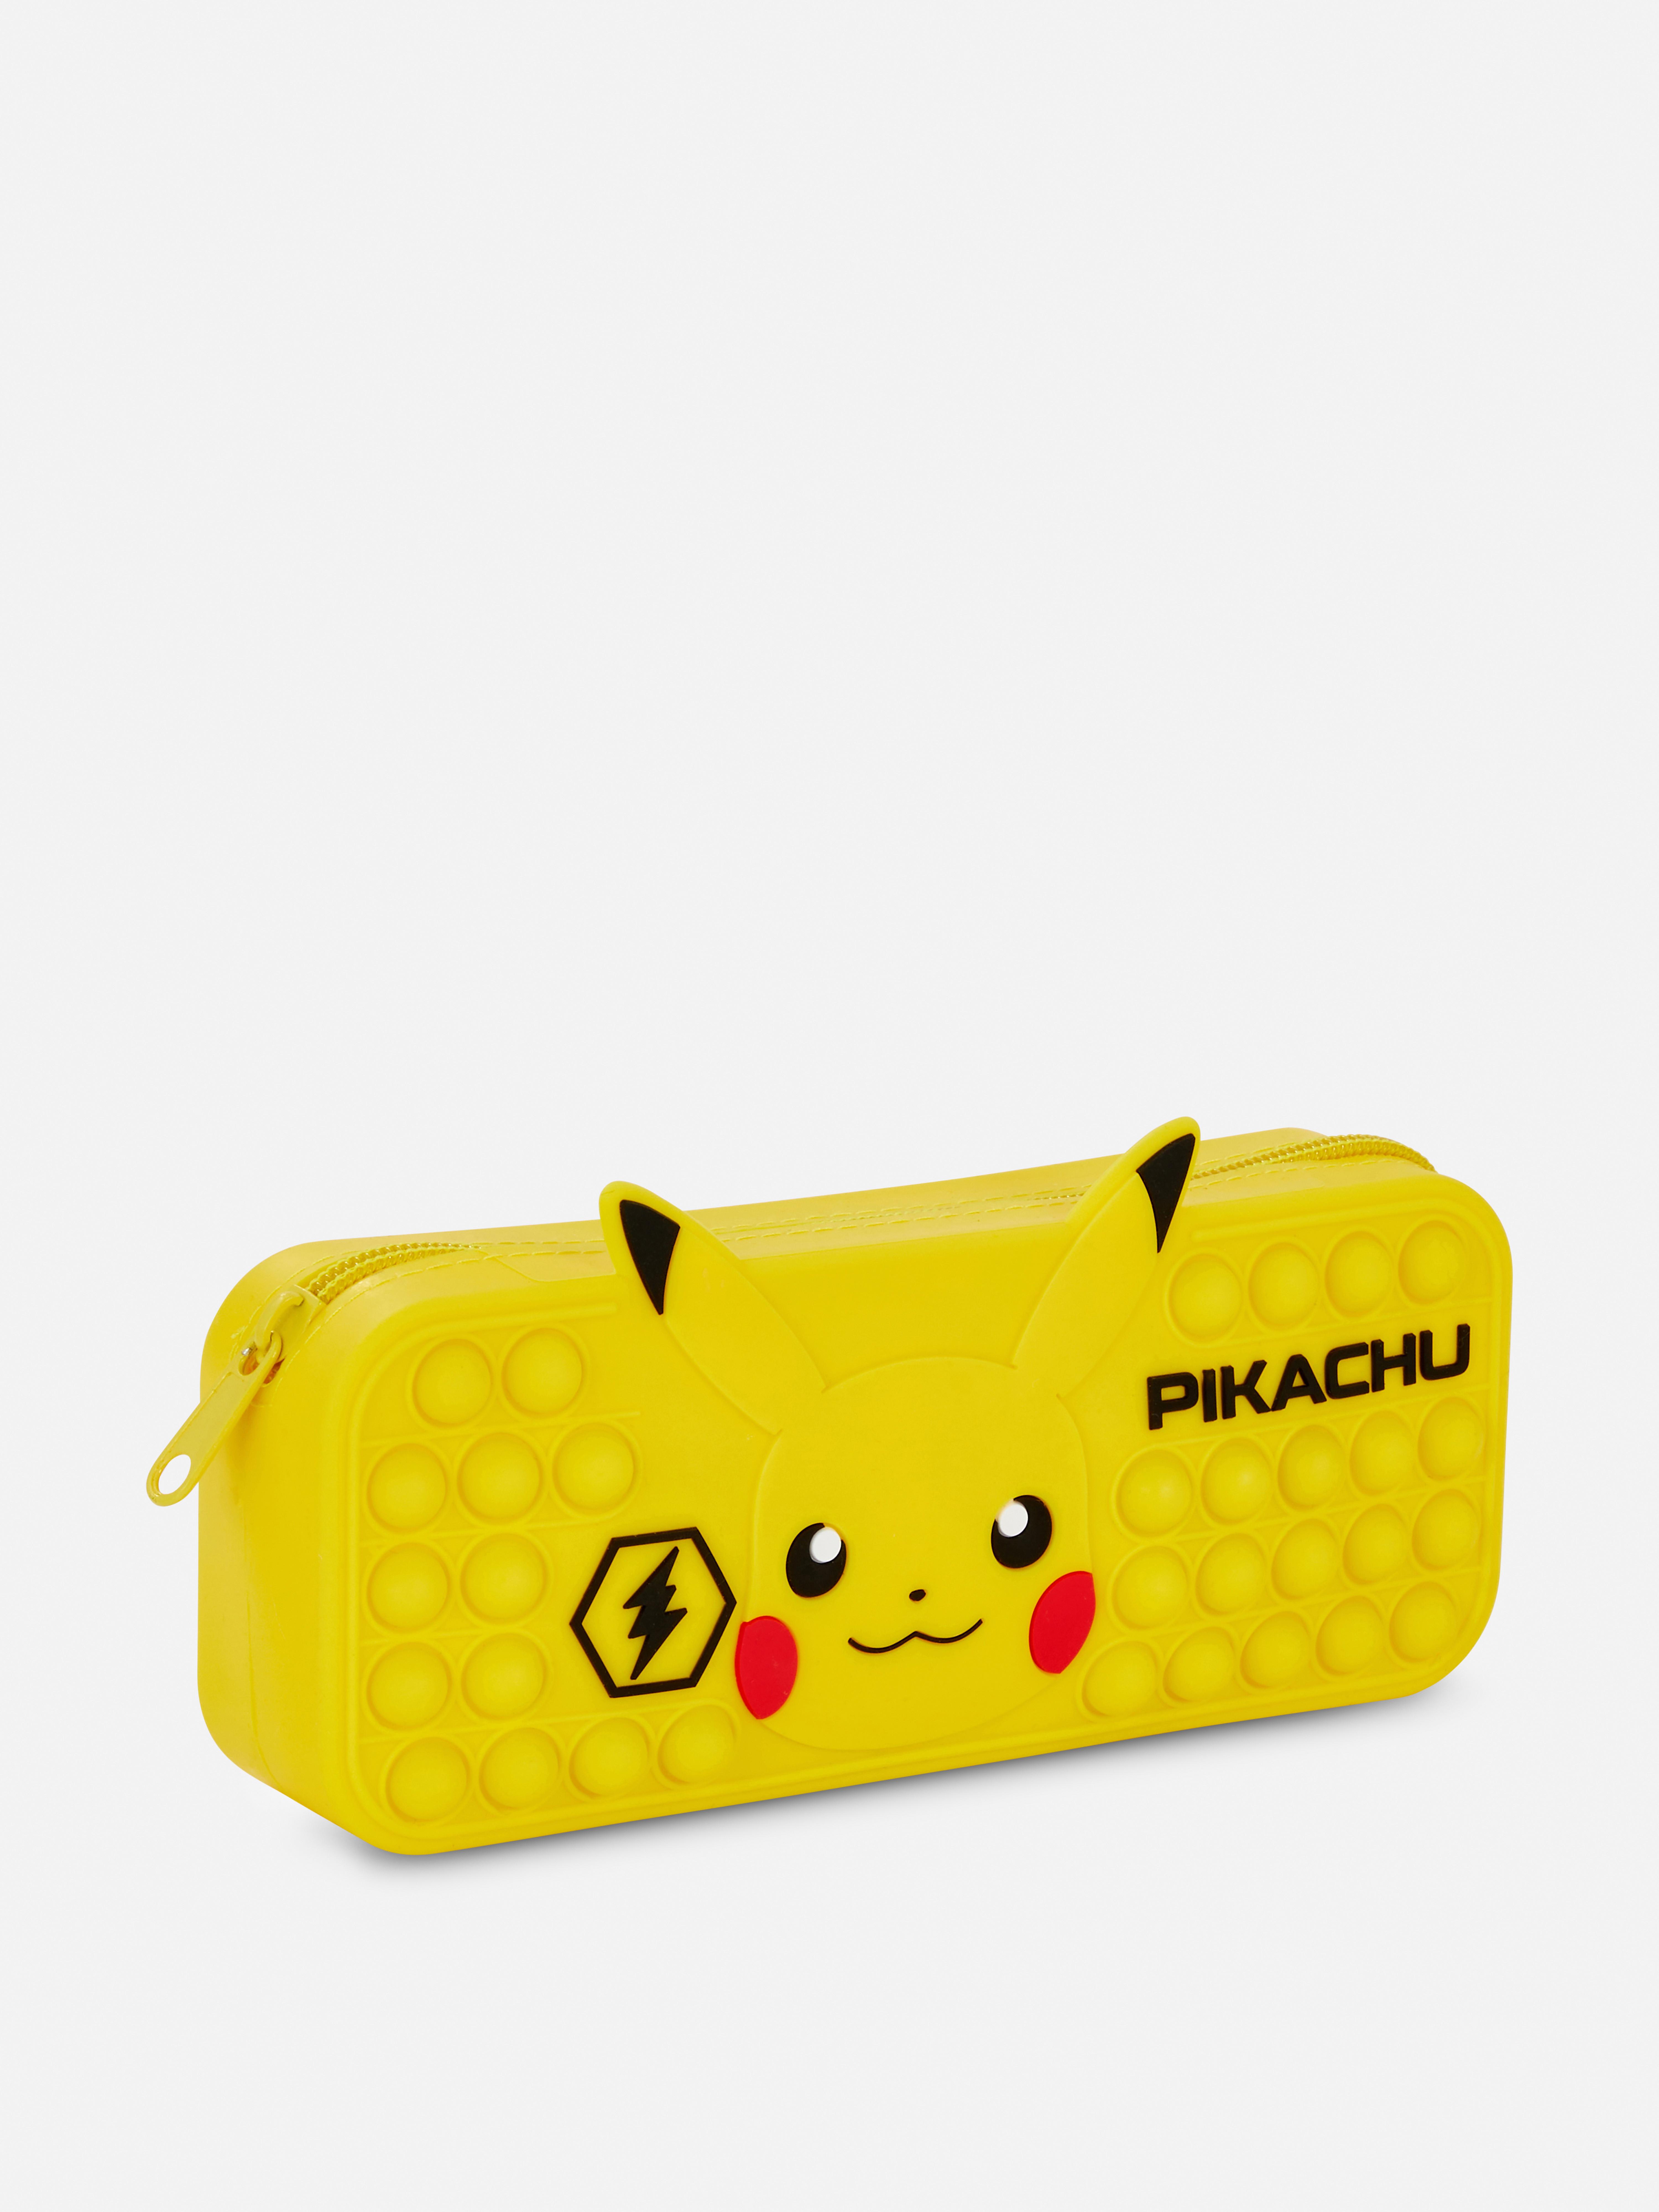 Pokémon Pikachu Pencil Case